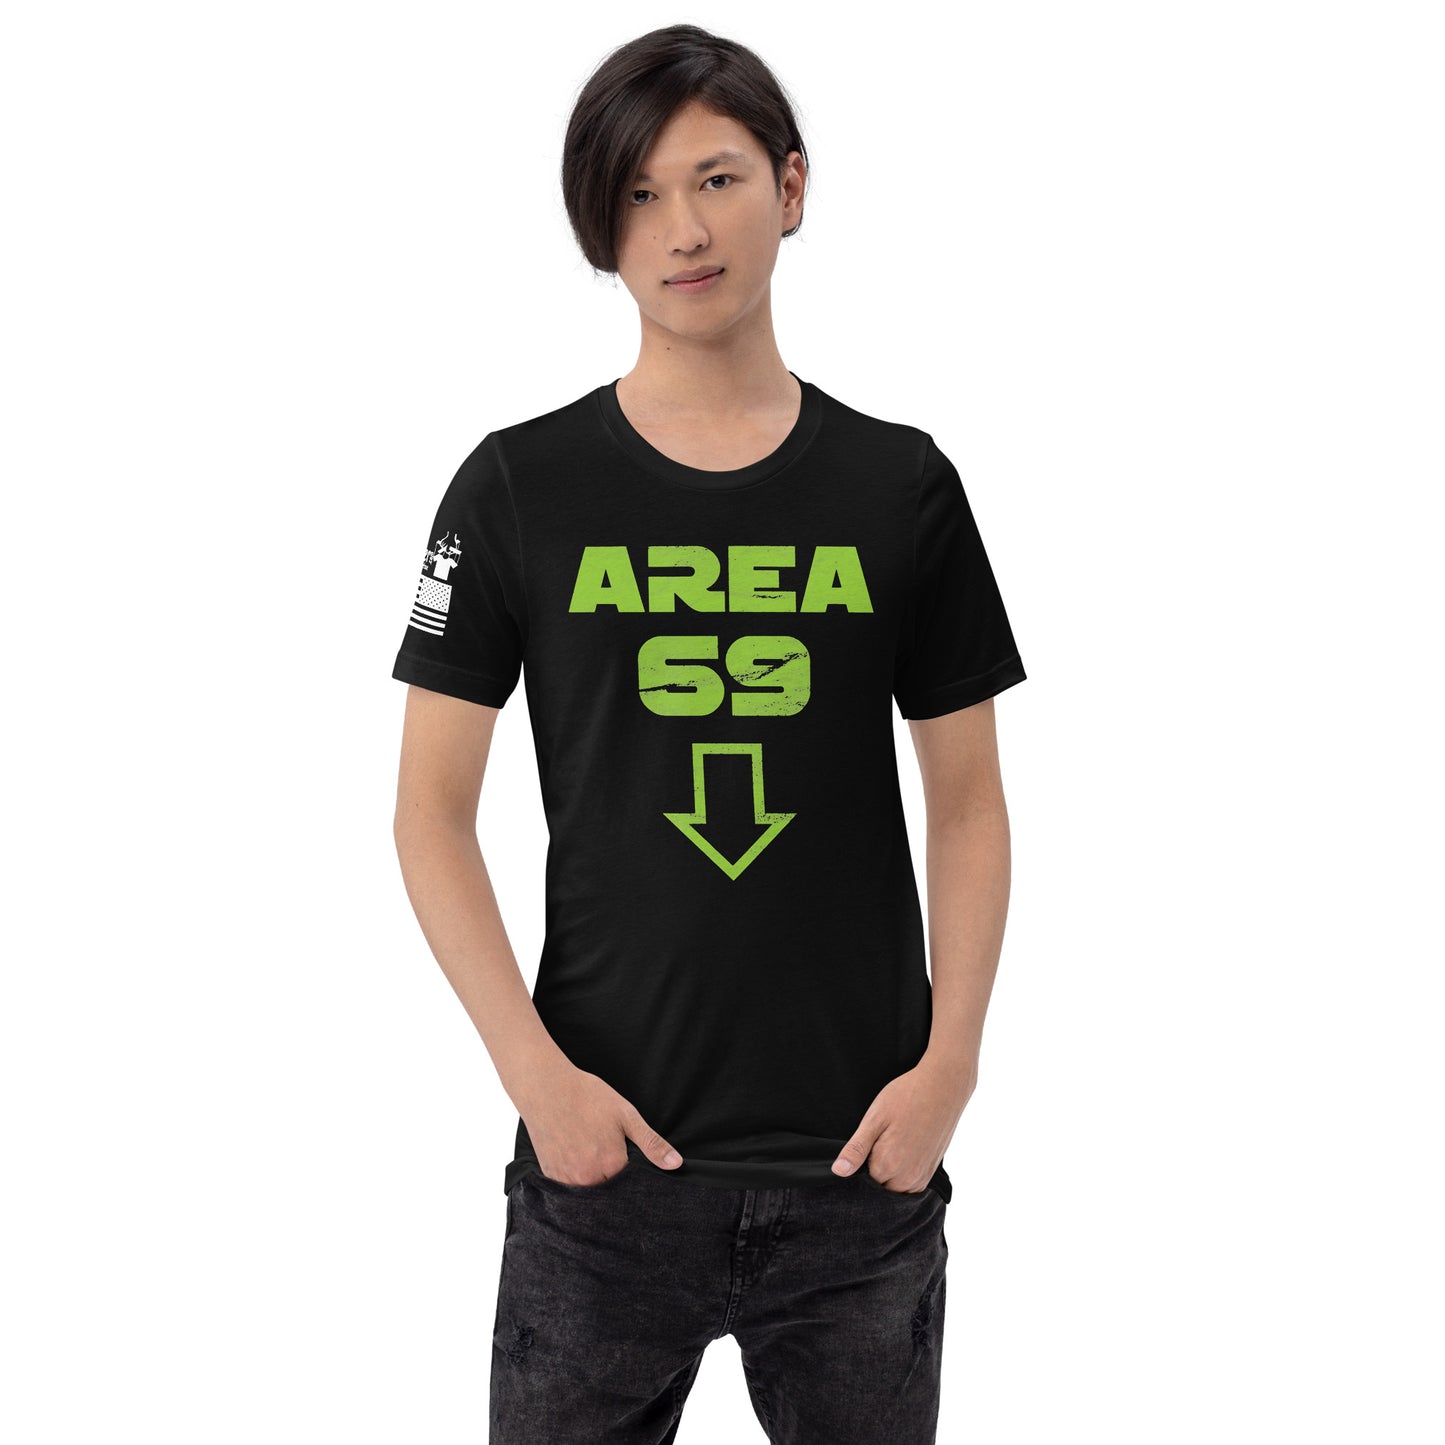 Area 69 - Premium T-Shirt (unisex) | TheShirtfather